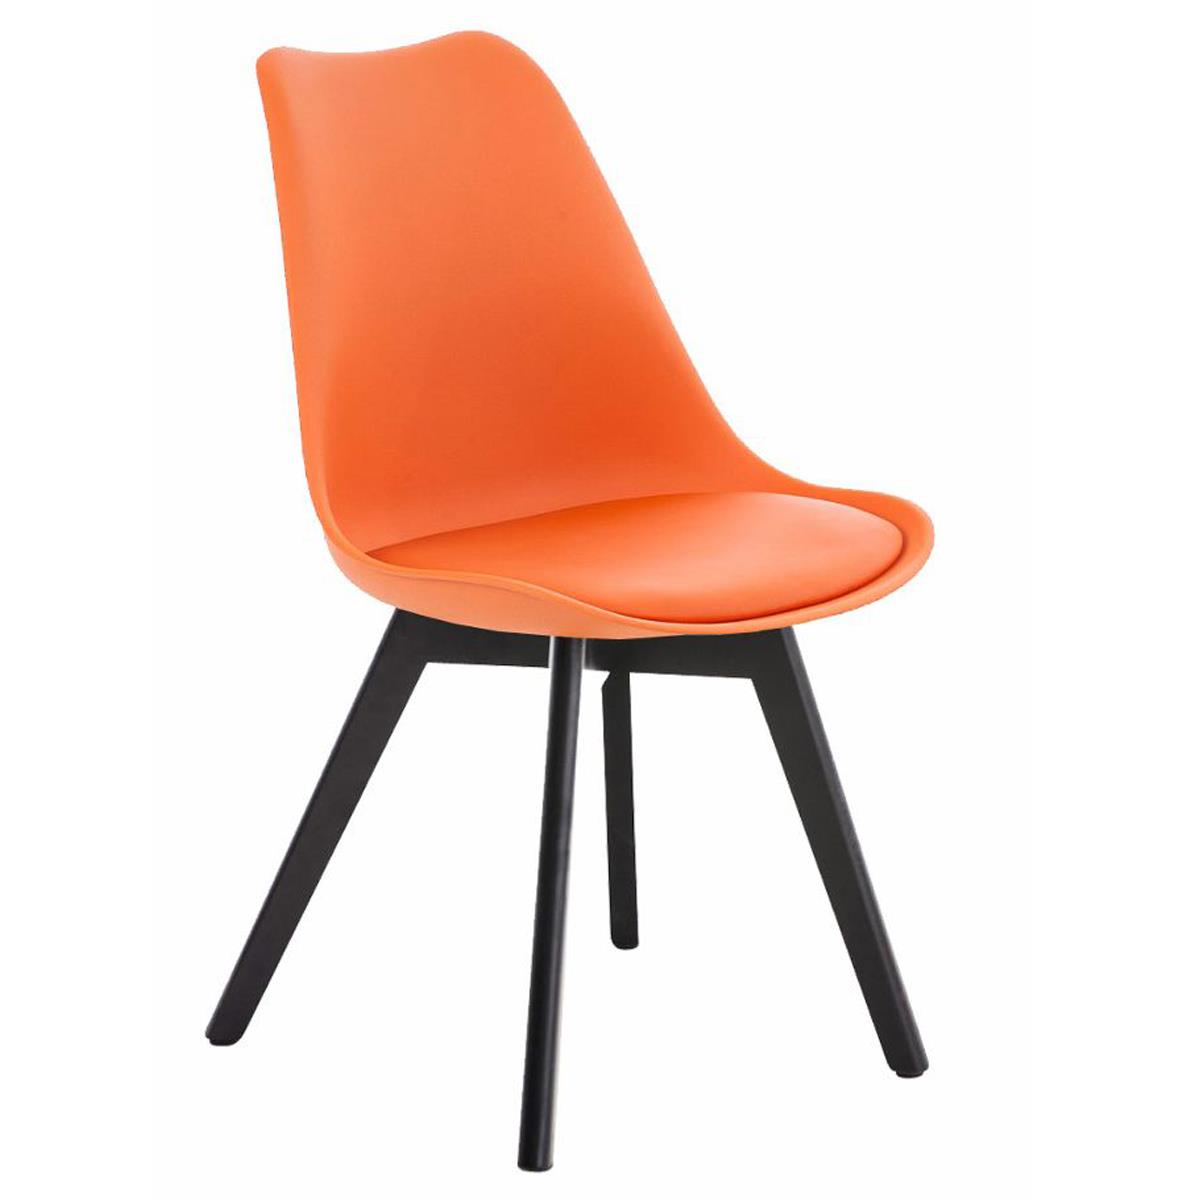 Designer Stuhl/ Besucherstuhl BOSPORUS, dunkle Stuhlbeine, Kunststoffsitzschale, Lederbezug, Farbe Orange